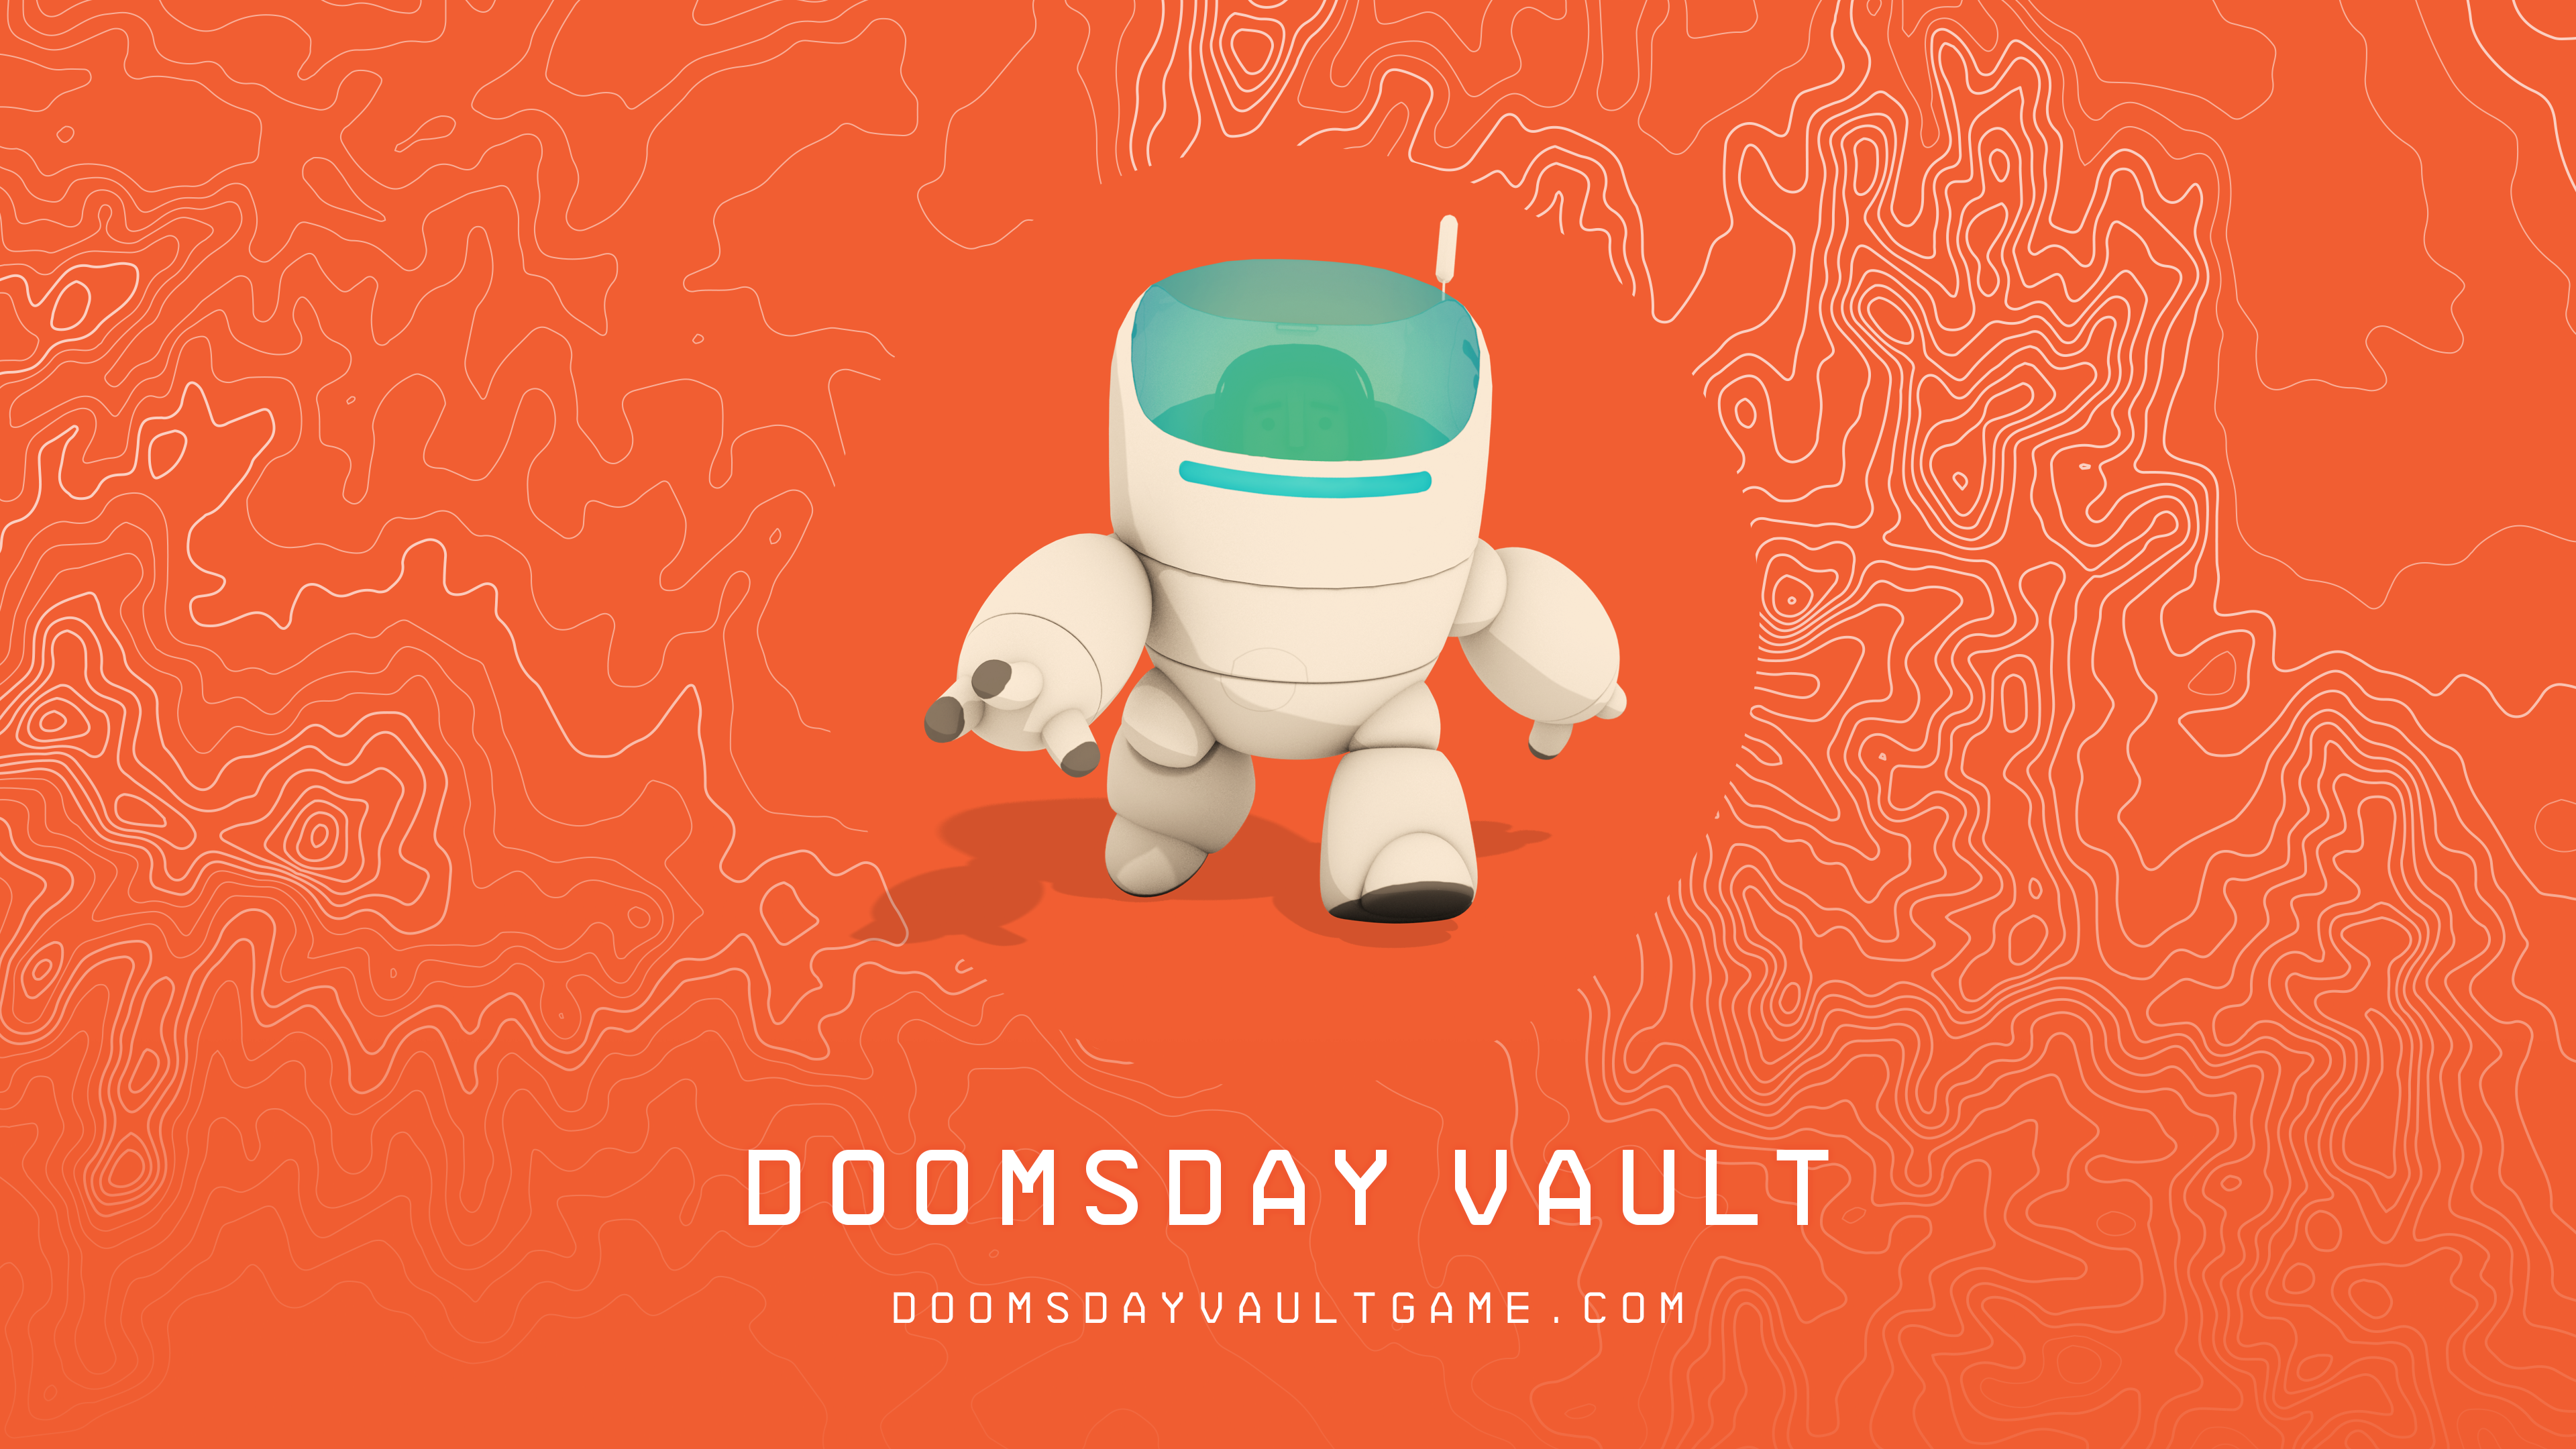 Doomsday_Vault_identity_pose_02.png